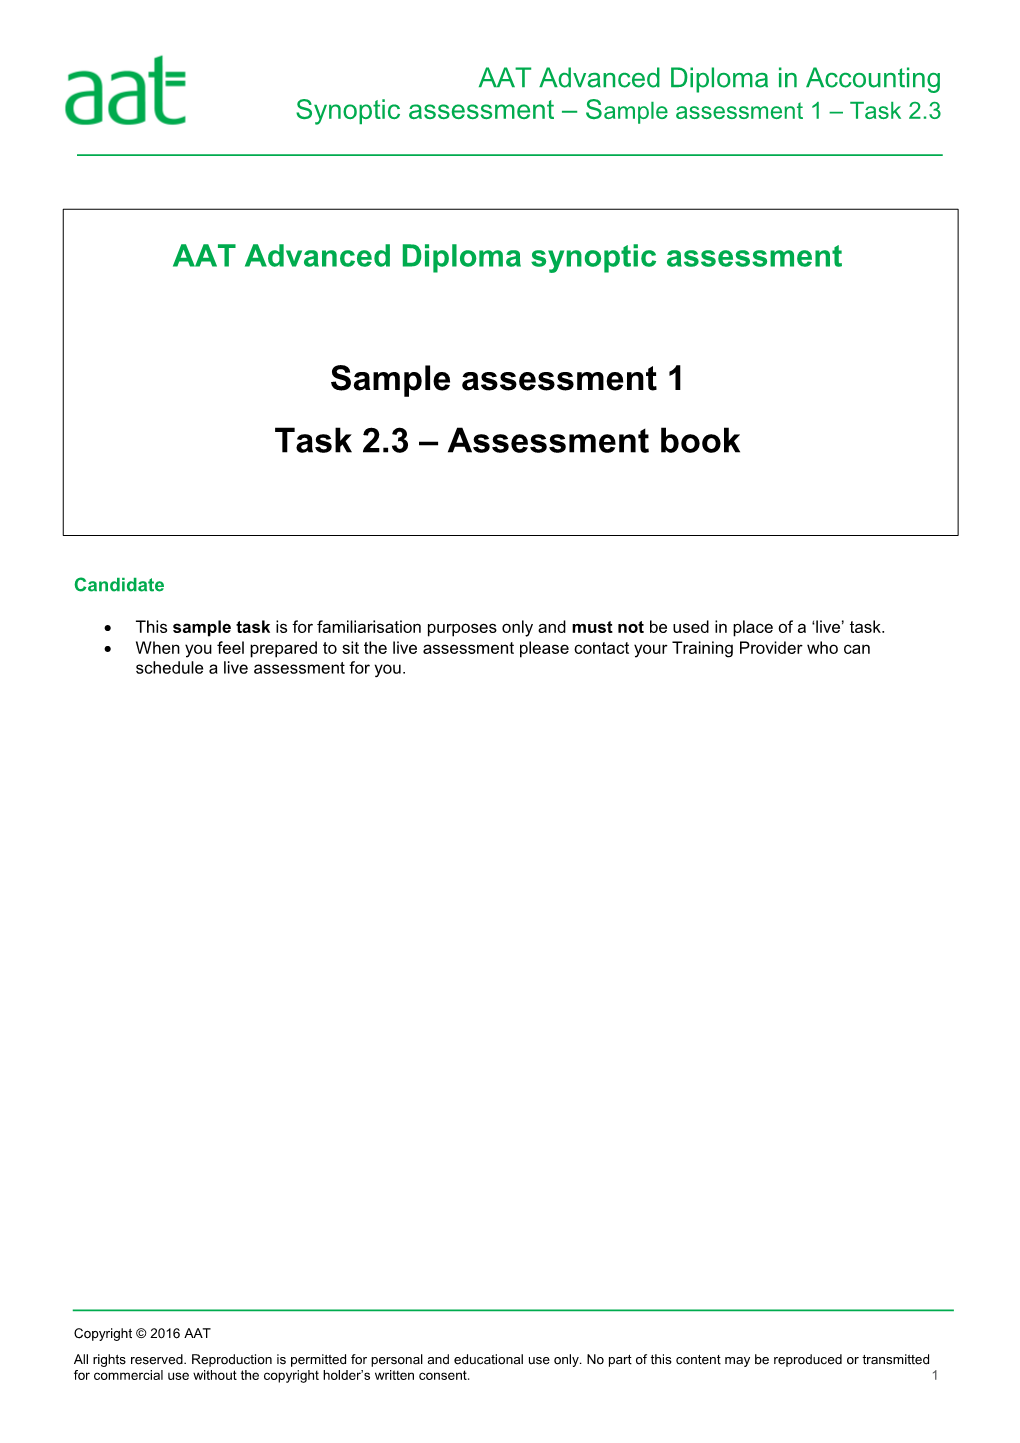 AAT Advanced Diploma Synoptic Assessment